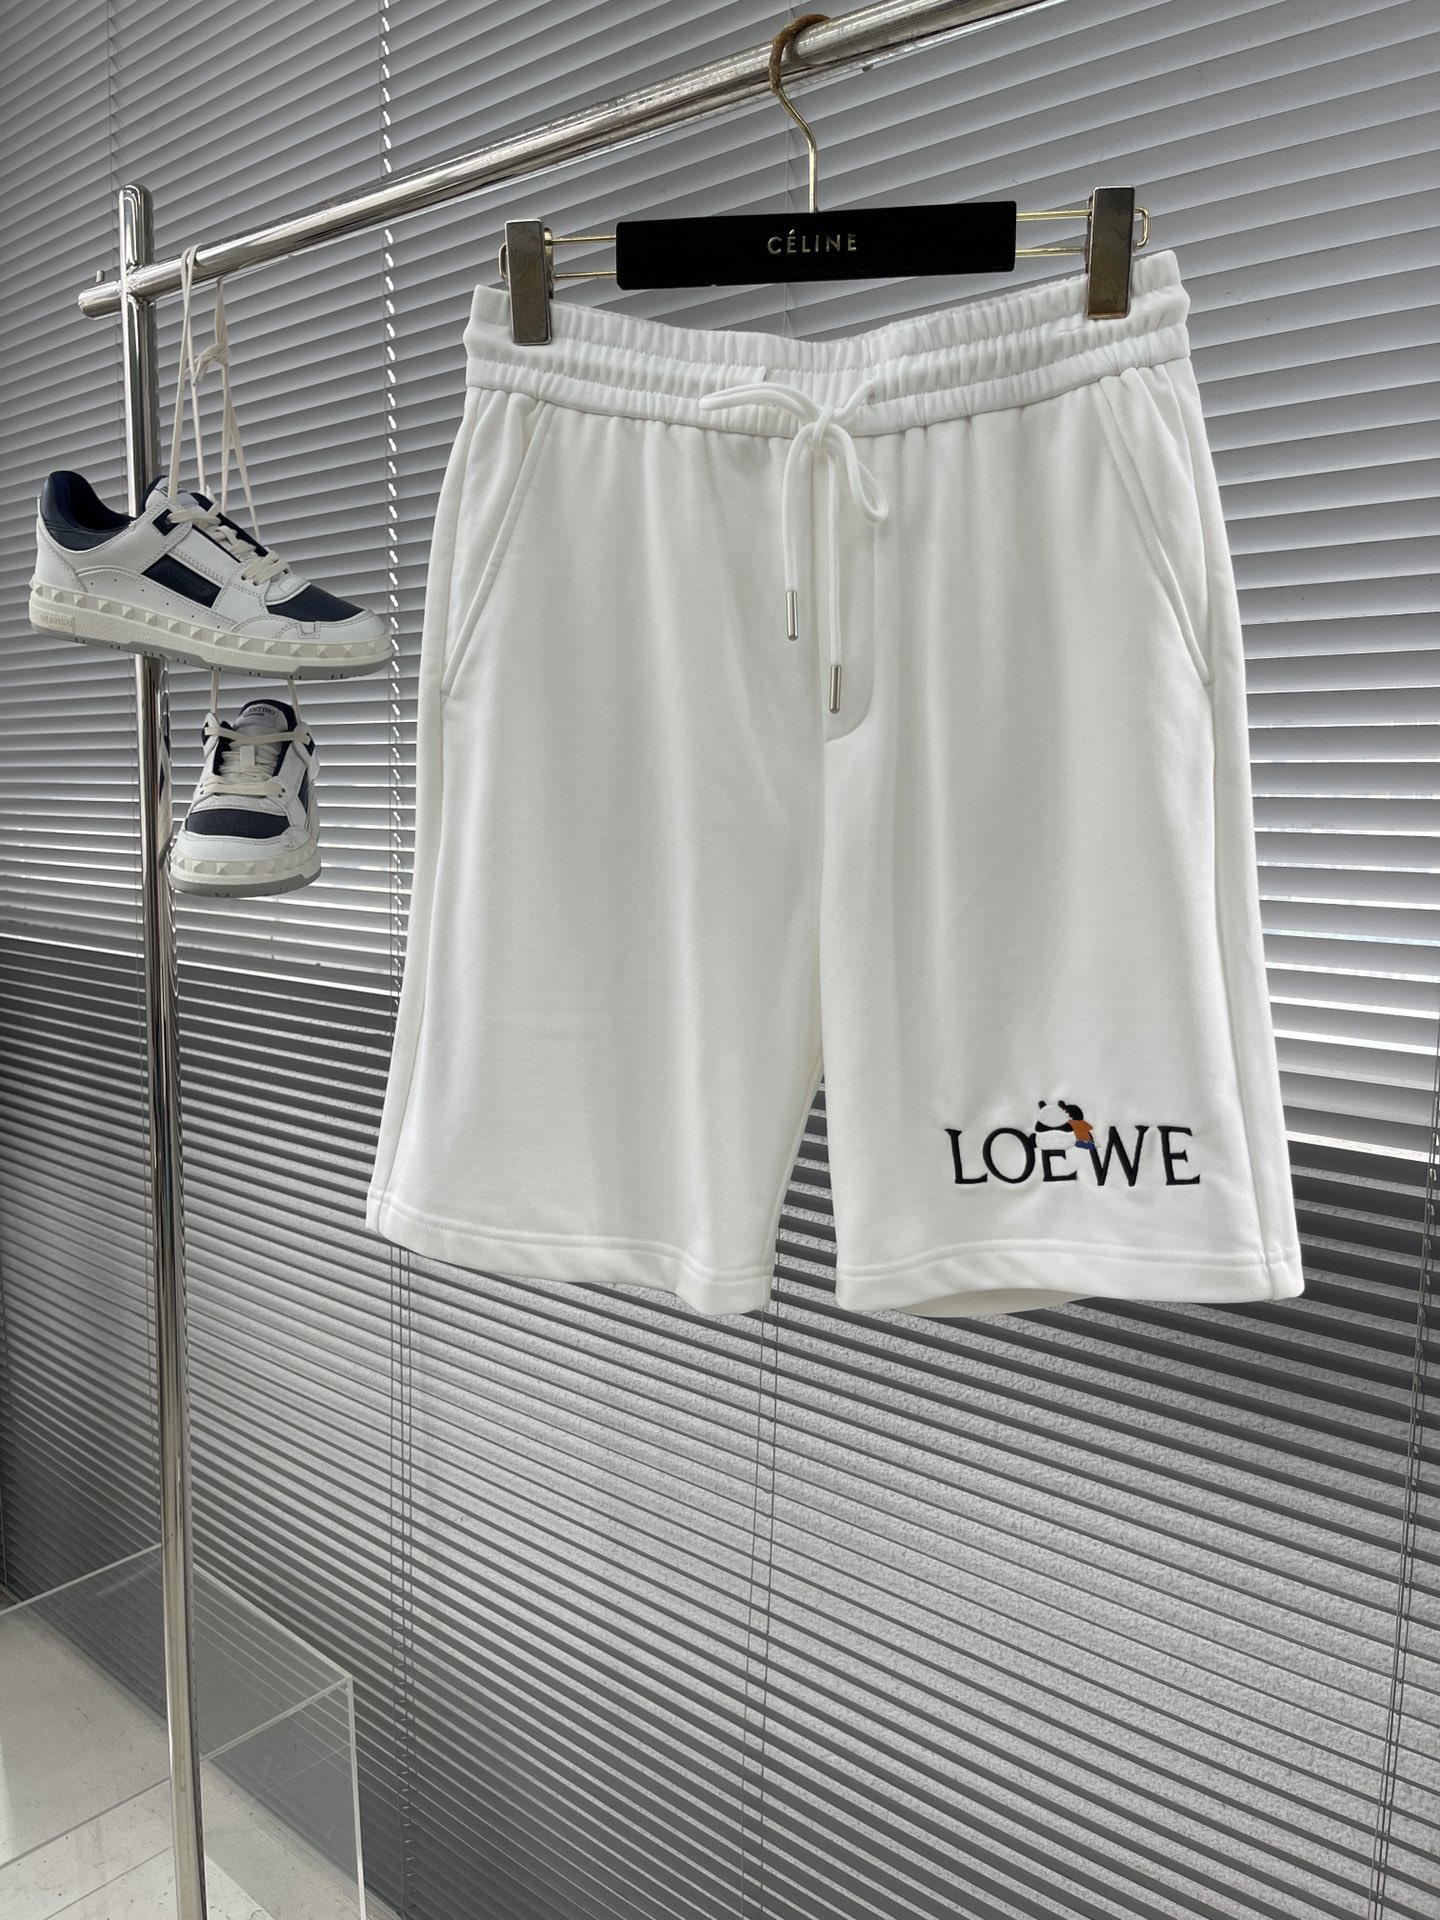 Loewe ملابس السراويل القصيرة قطن سلسلة الصيف موضة عارضة